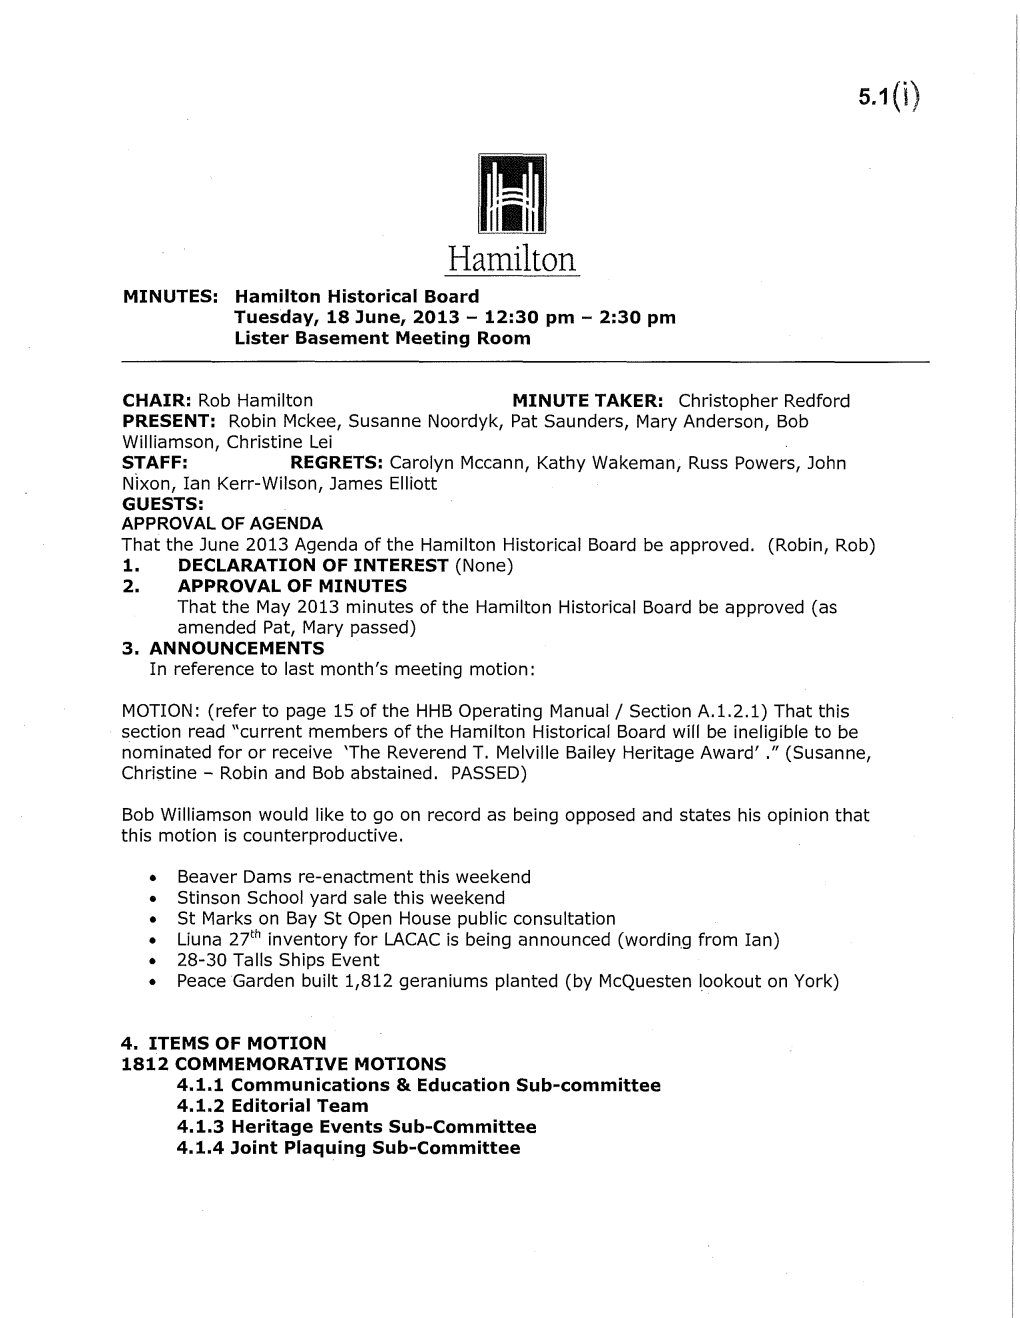 Hamilton MINUTES: Hamilton Historical Board Tuesday, 18 June, 2013 - 12:30 Pm - 2:30 Prn Lister Basement Meeting Room